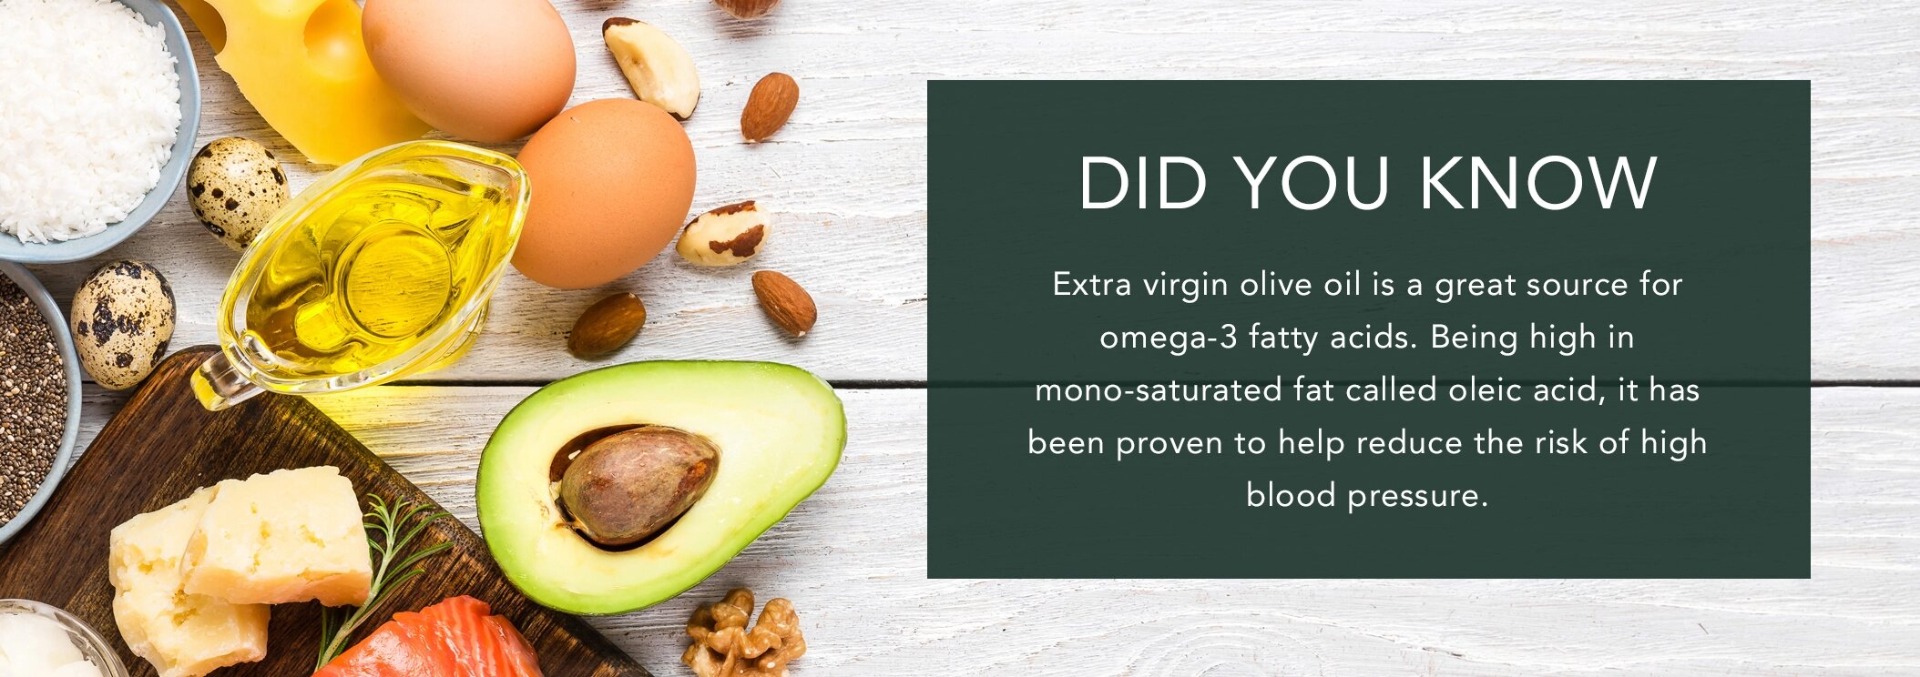 use olive oil instead of vegetable oil for baking